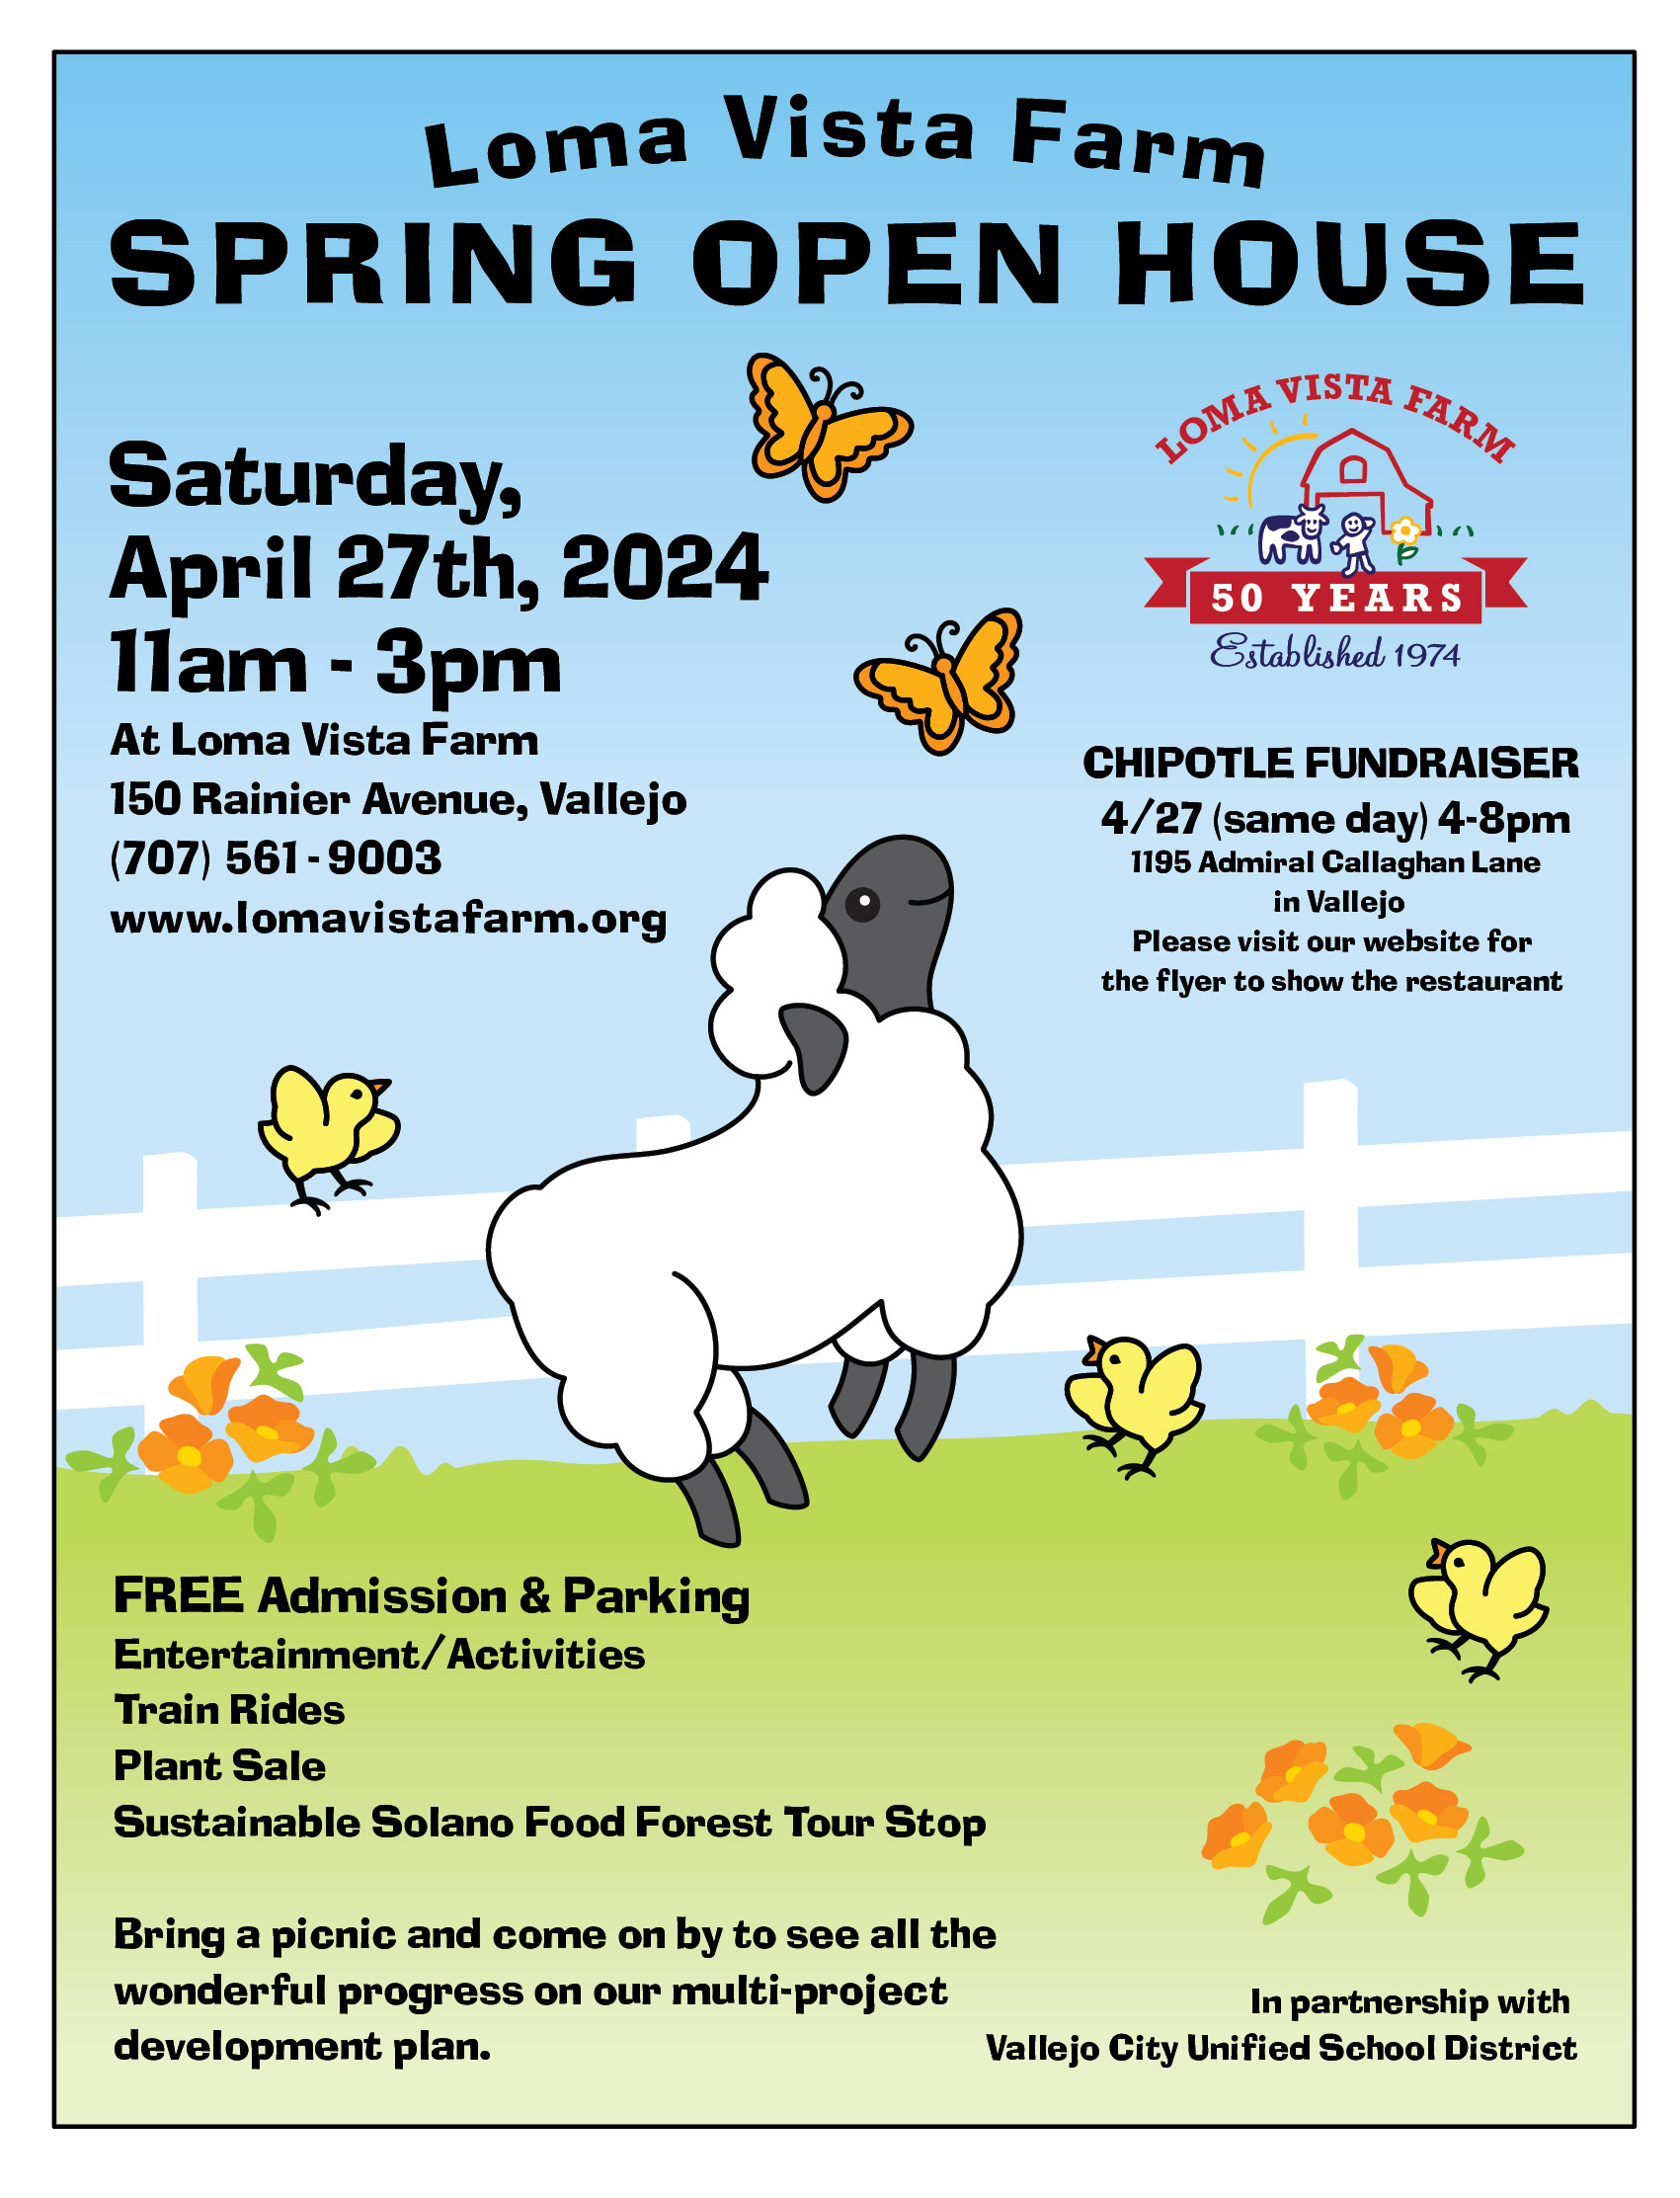 Spring Open House at Loma Vista Farm Vallejo